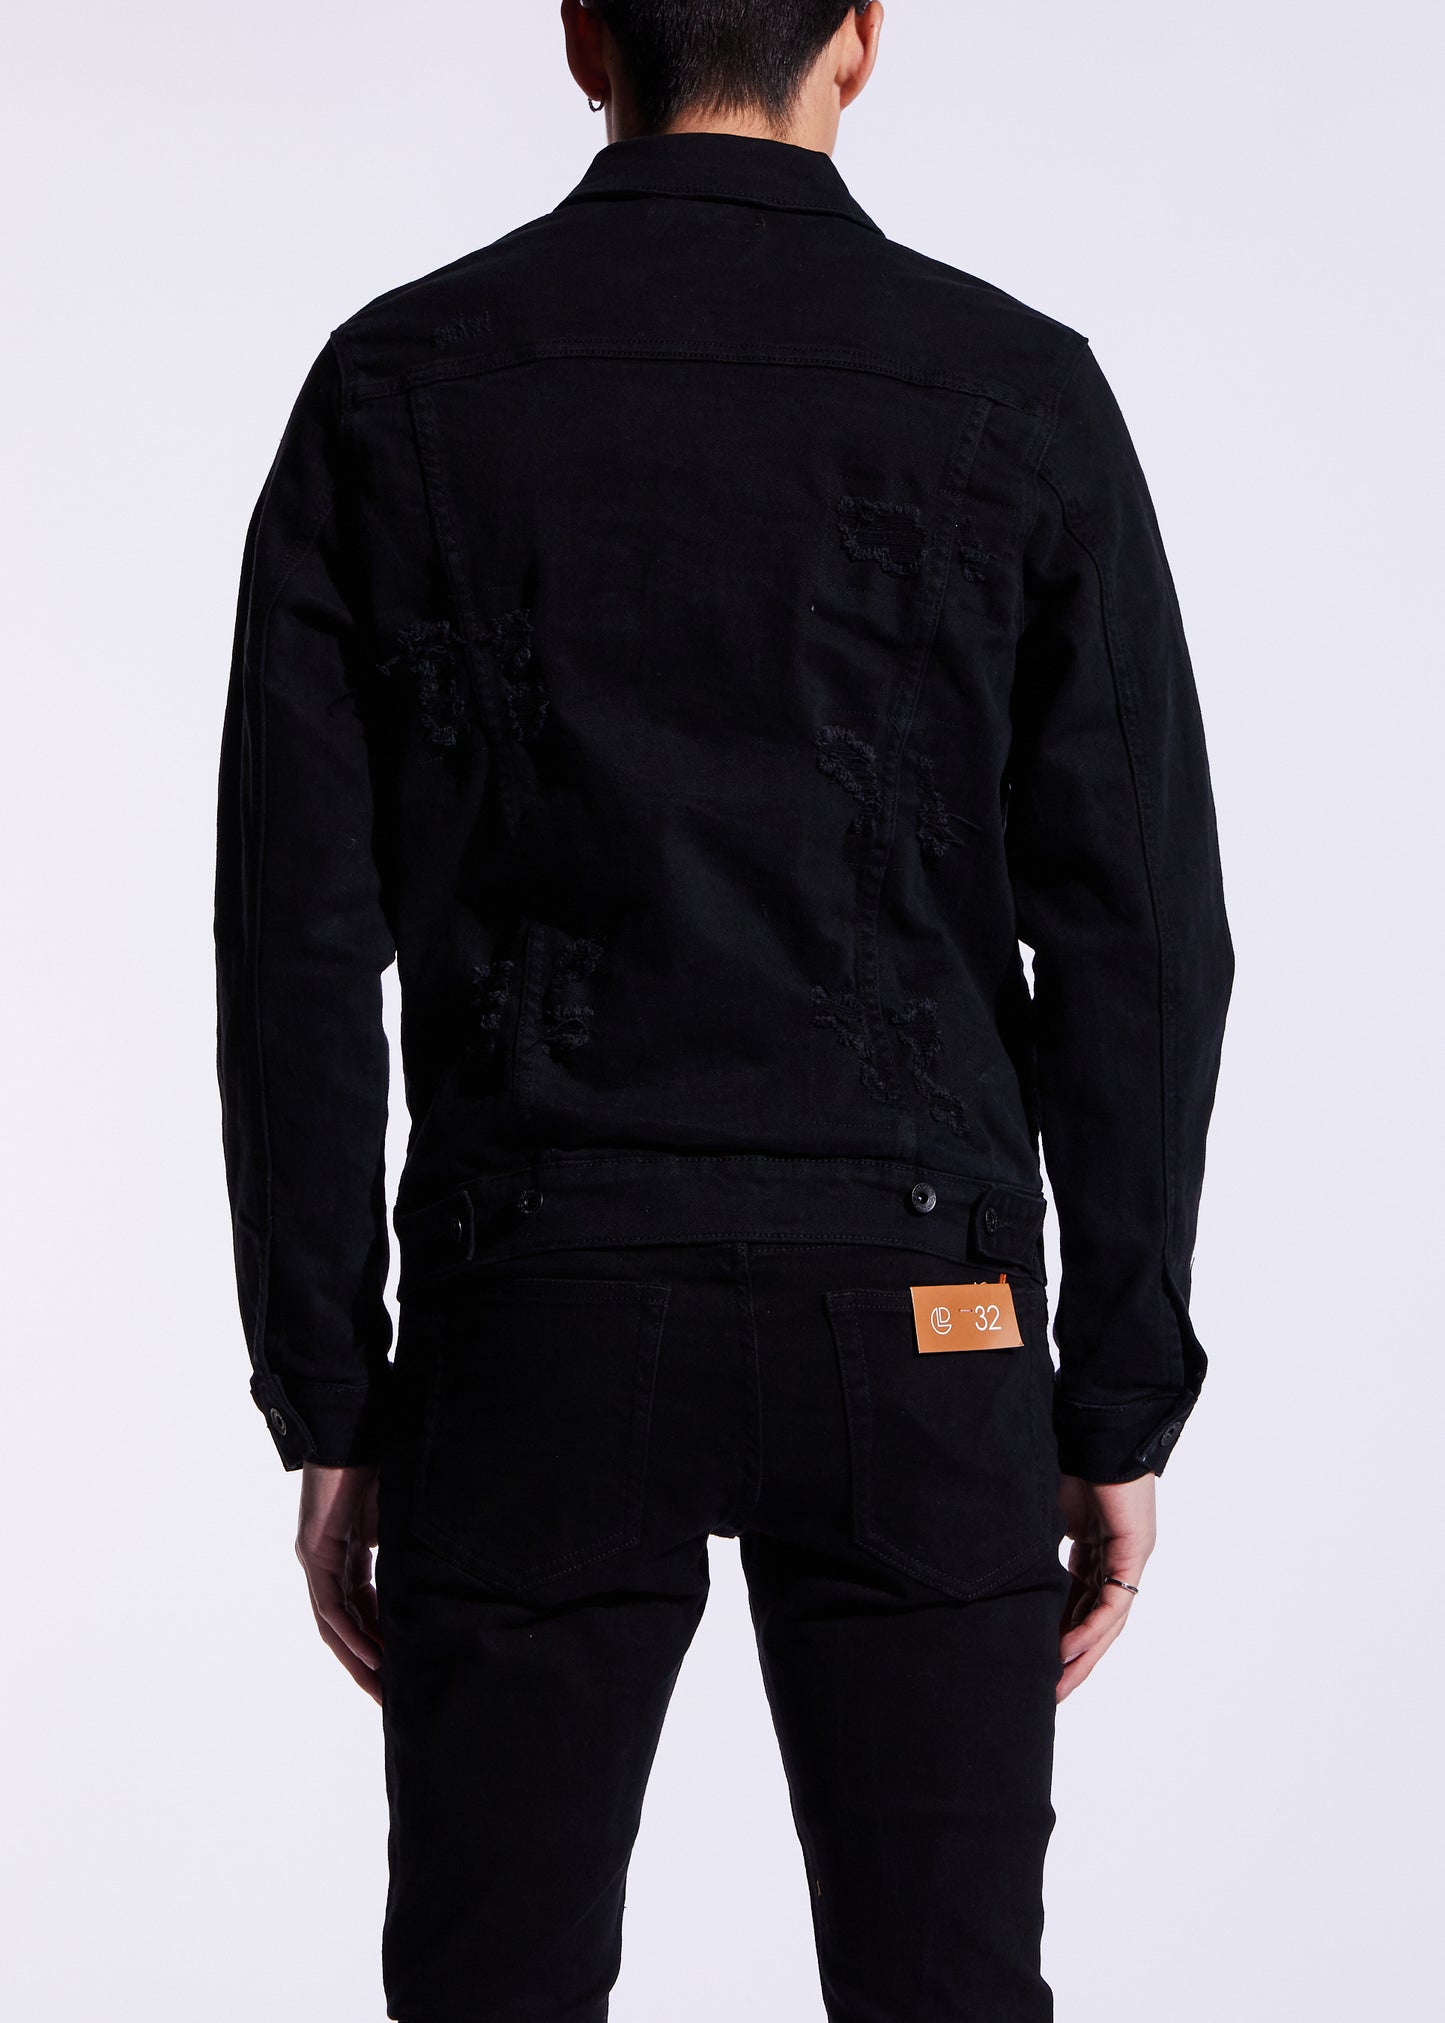 Bering Denim Jacket (Black Distressed)